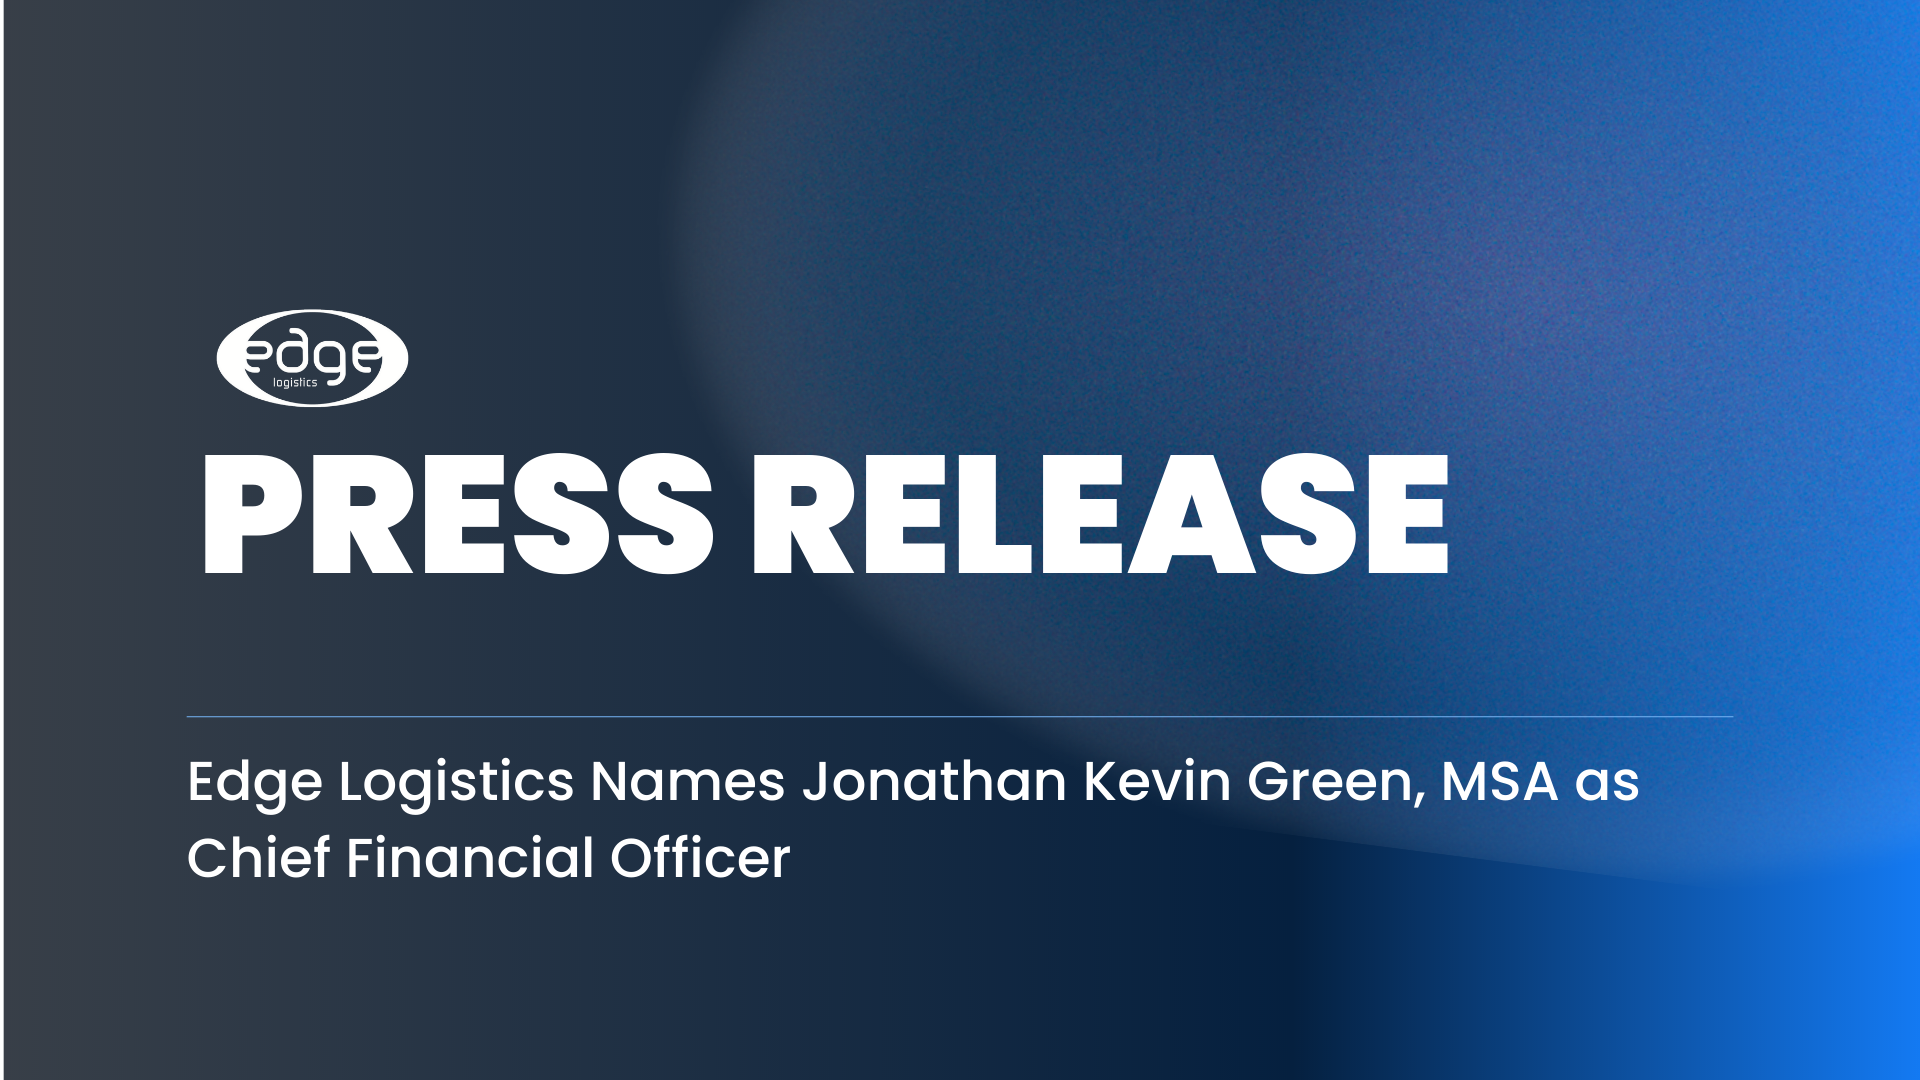 Edge Logistics Names Jonathan Kevin Green, MSA as Chief Financial Officer